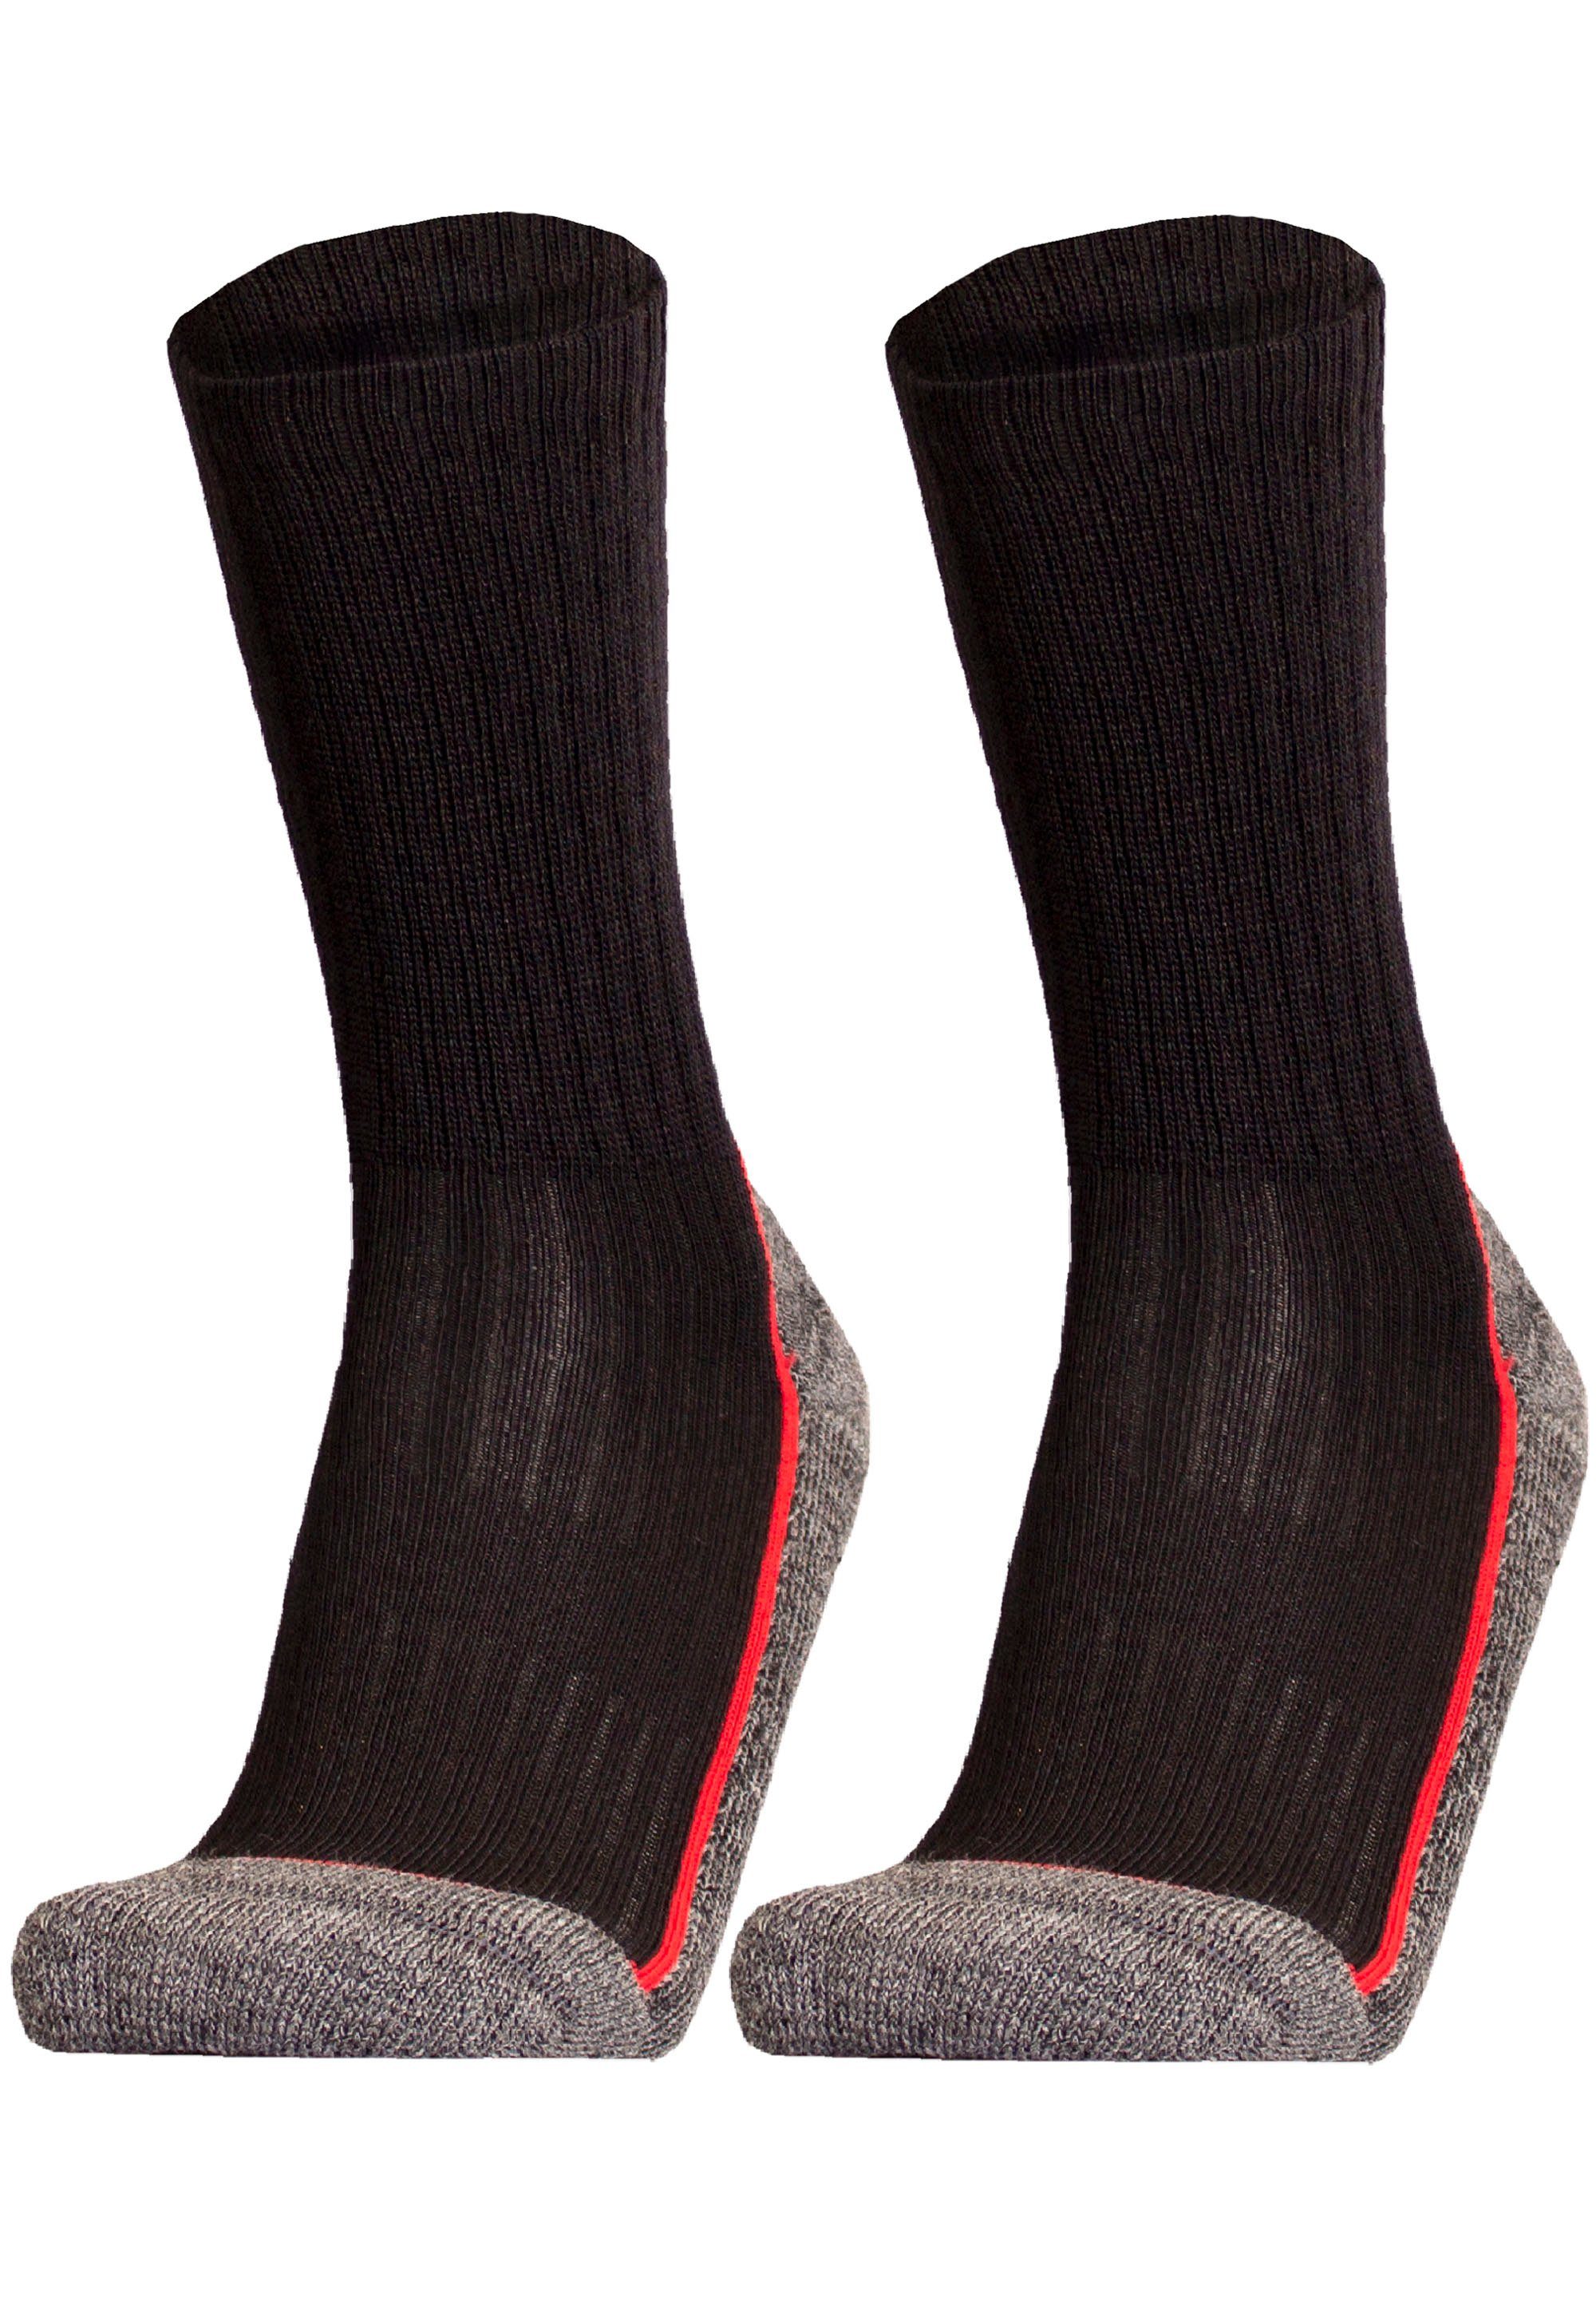 UphillSport Socken SAANA 2er Pack (2-Paar) mit speziell geformter Ferse | Wandersocken